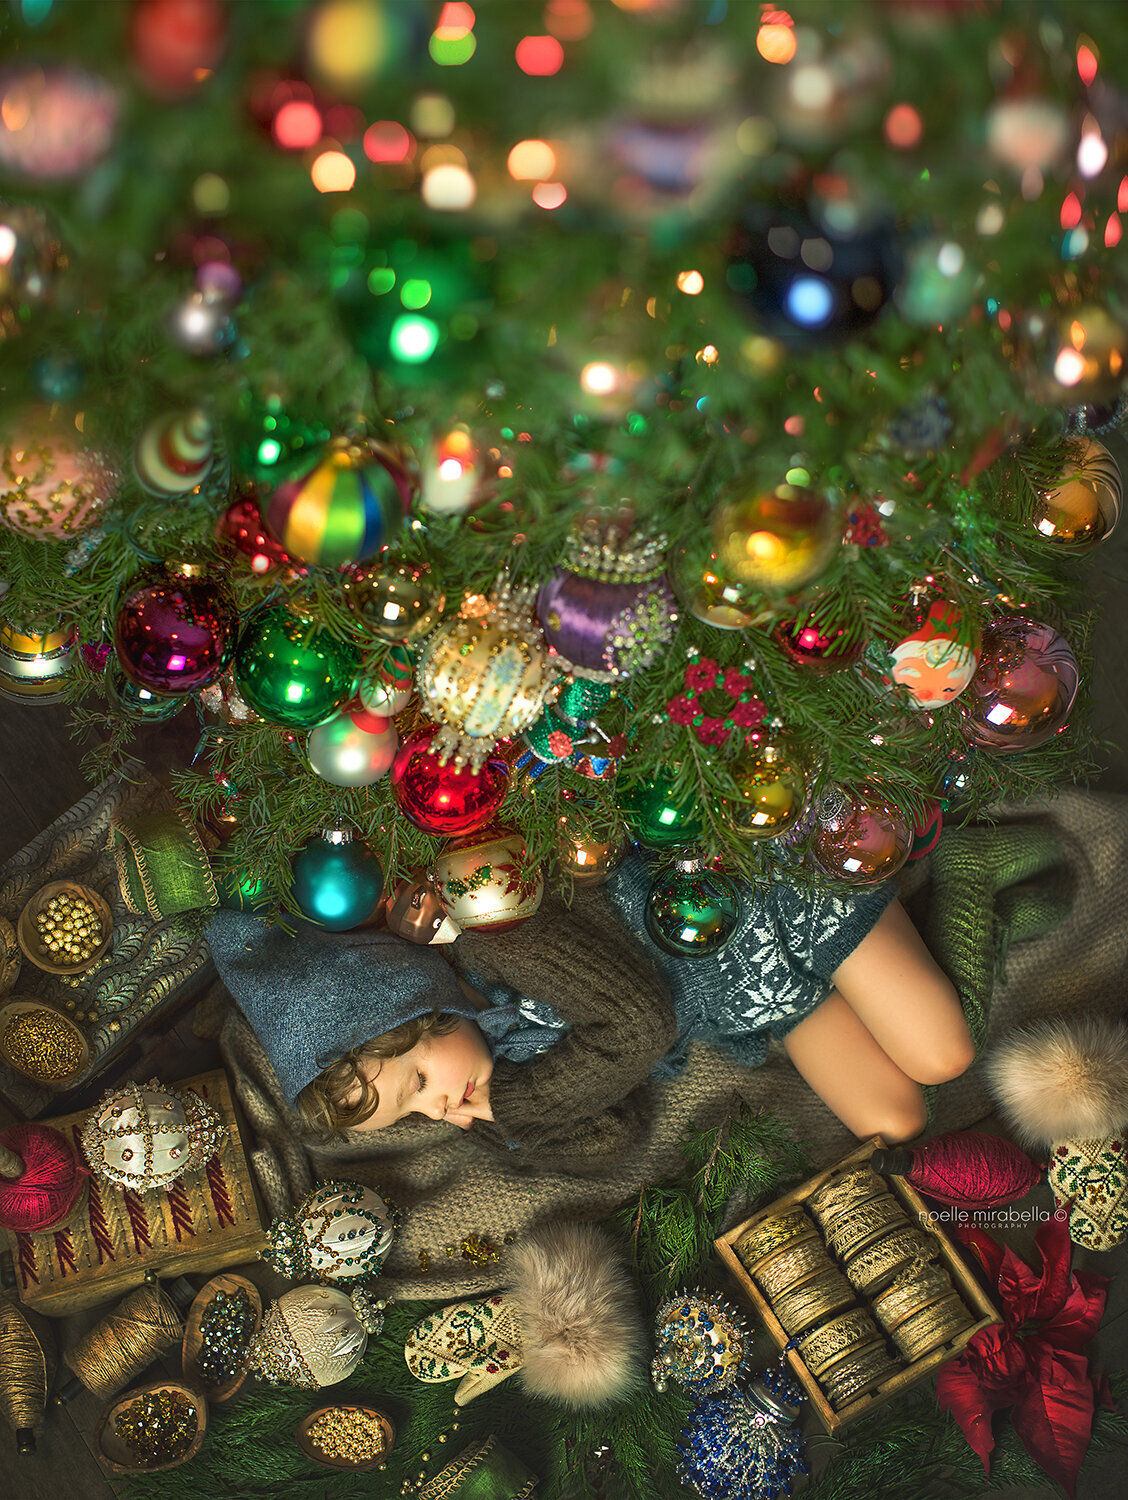 Small child sleeping under Christmas tree full of Christmas ornaments.